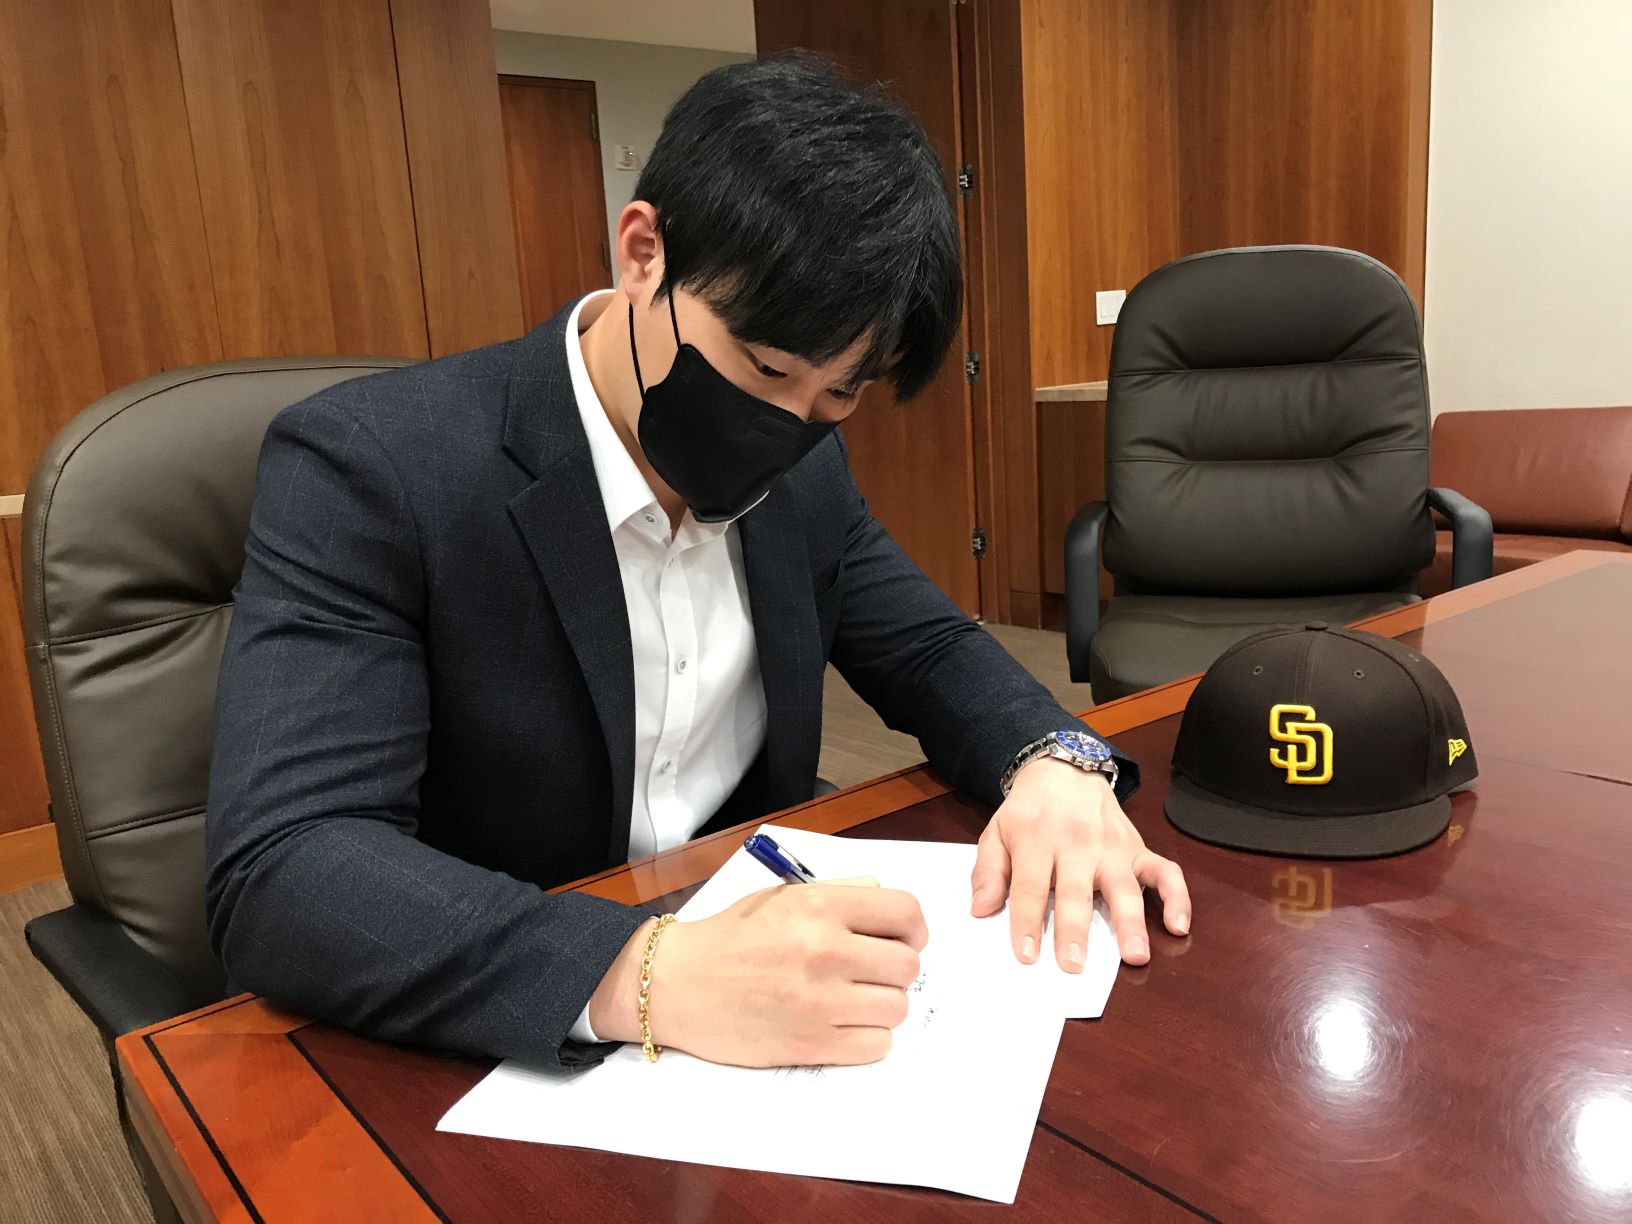 Report: San Diego Padres signing KBO star Ha-seong Kim 